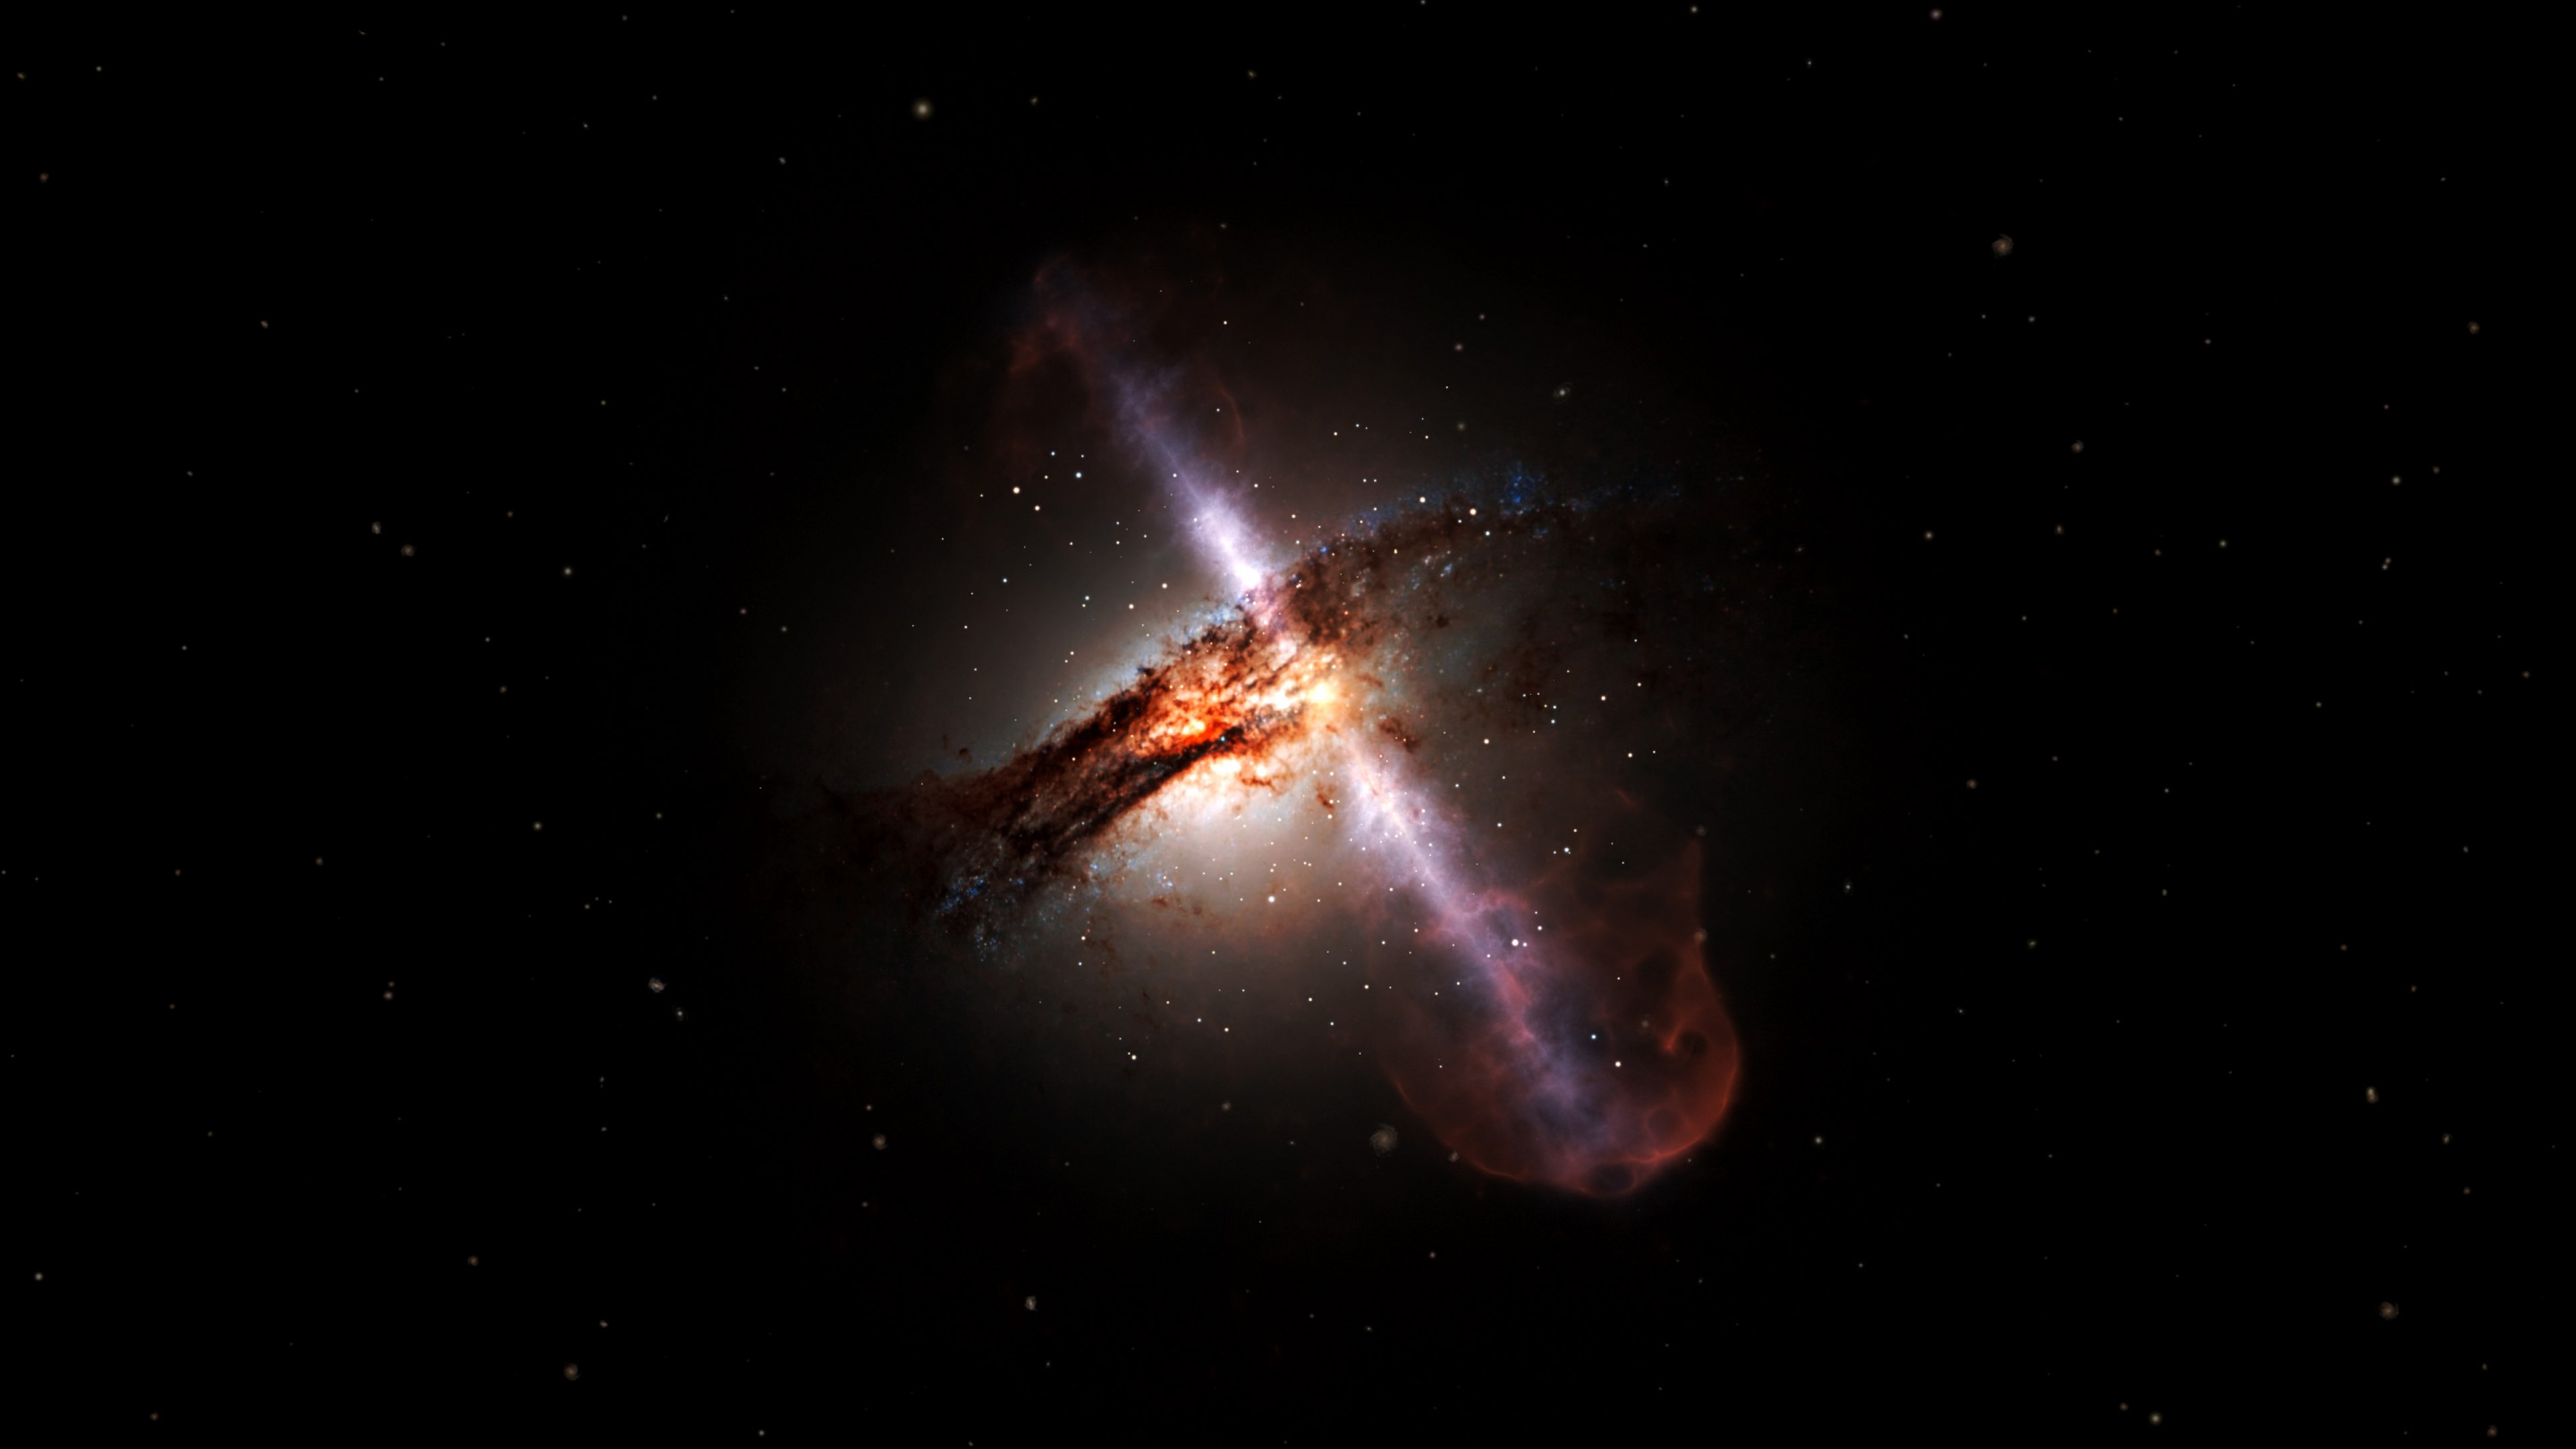 Supermassive black hole wallpaper 2880x1620